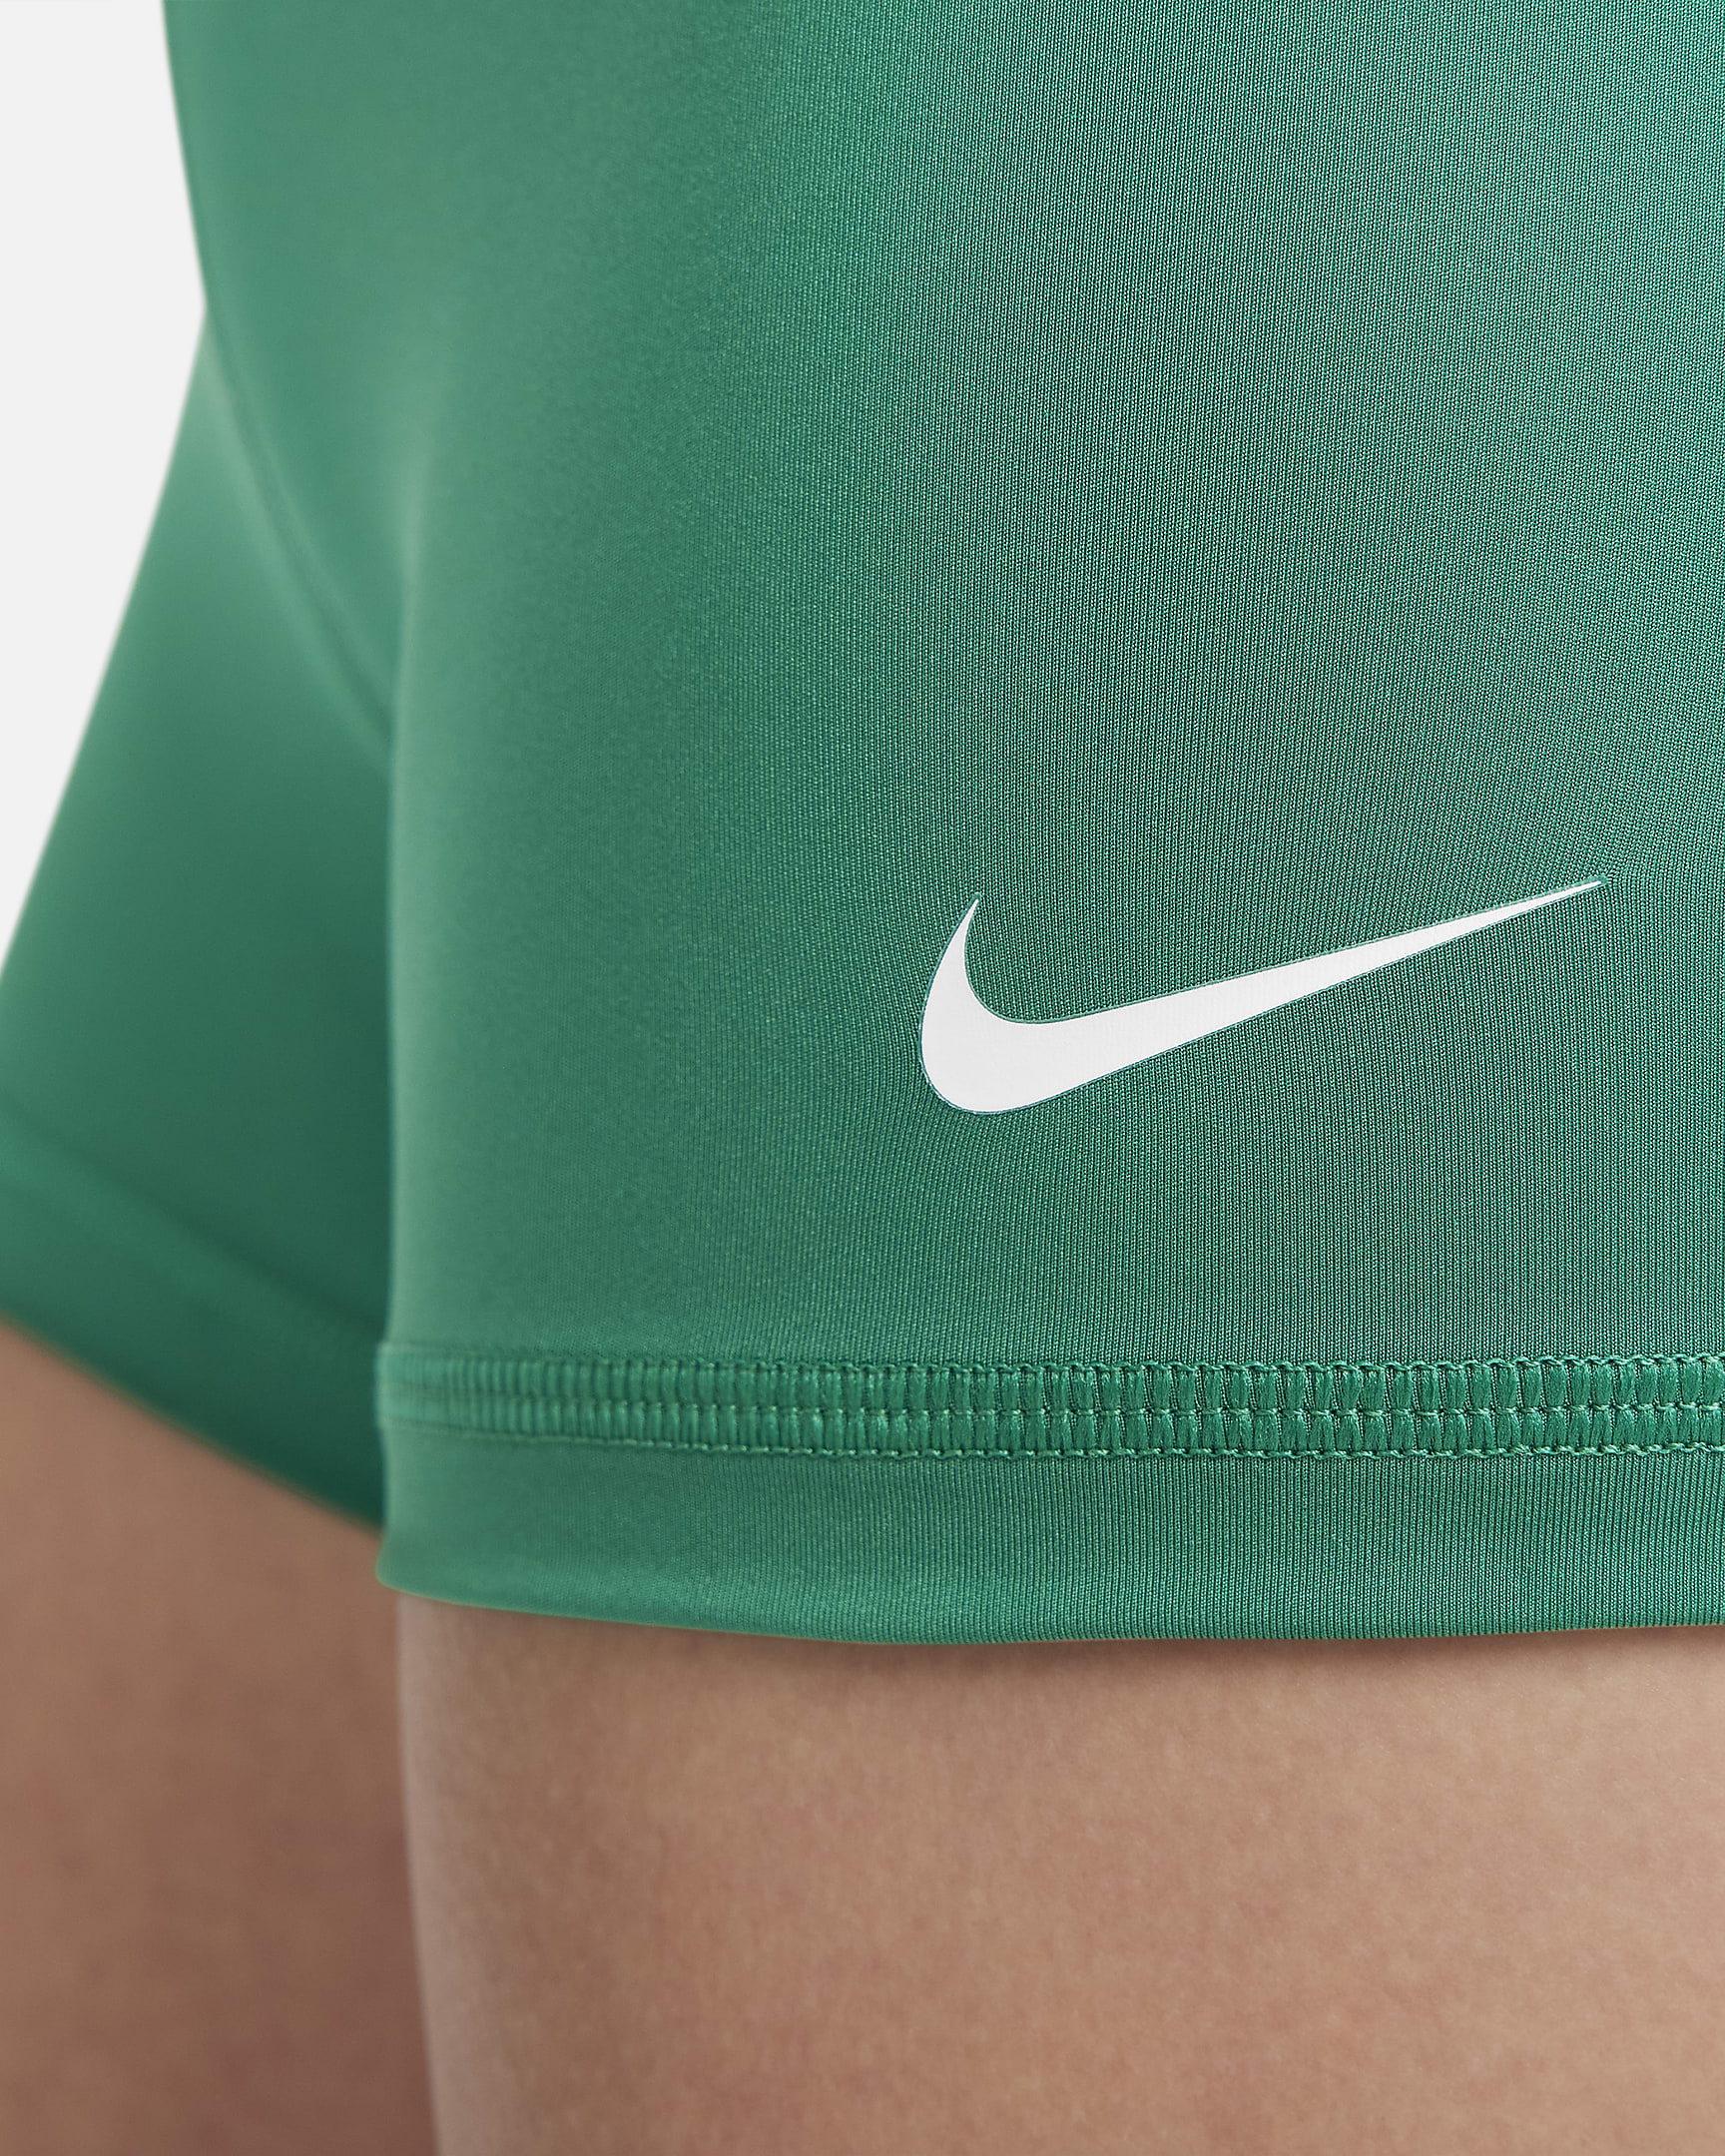 Nike Pro Women's 3" Shorts - Malachite/White